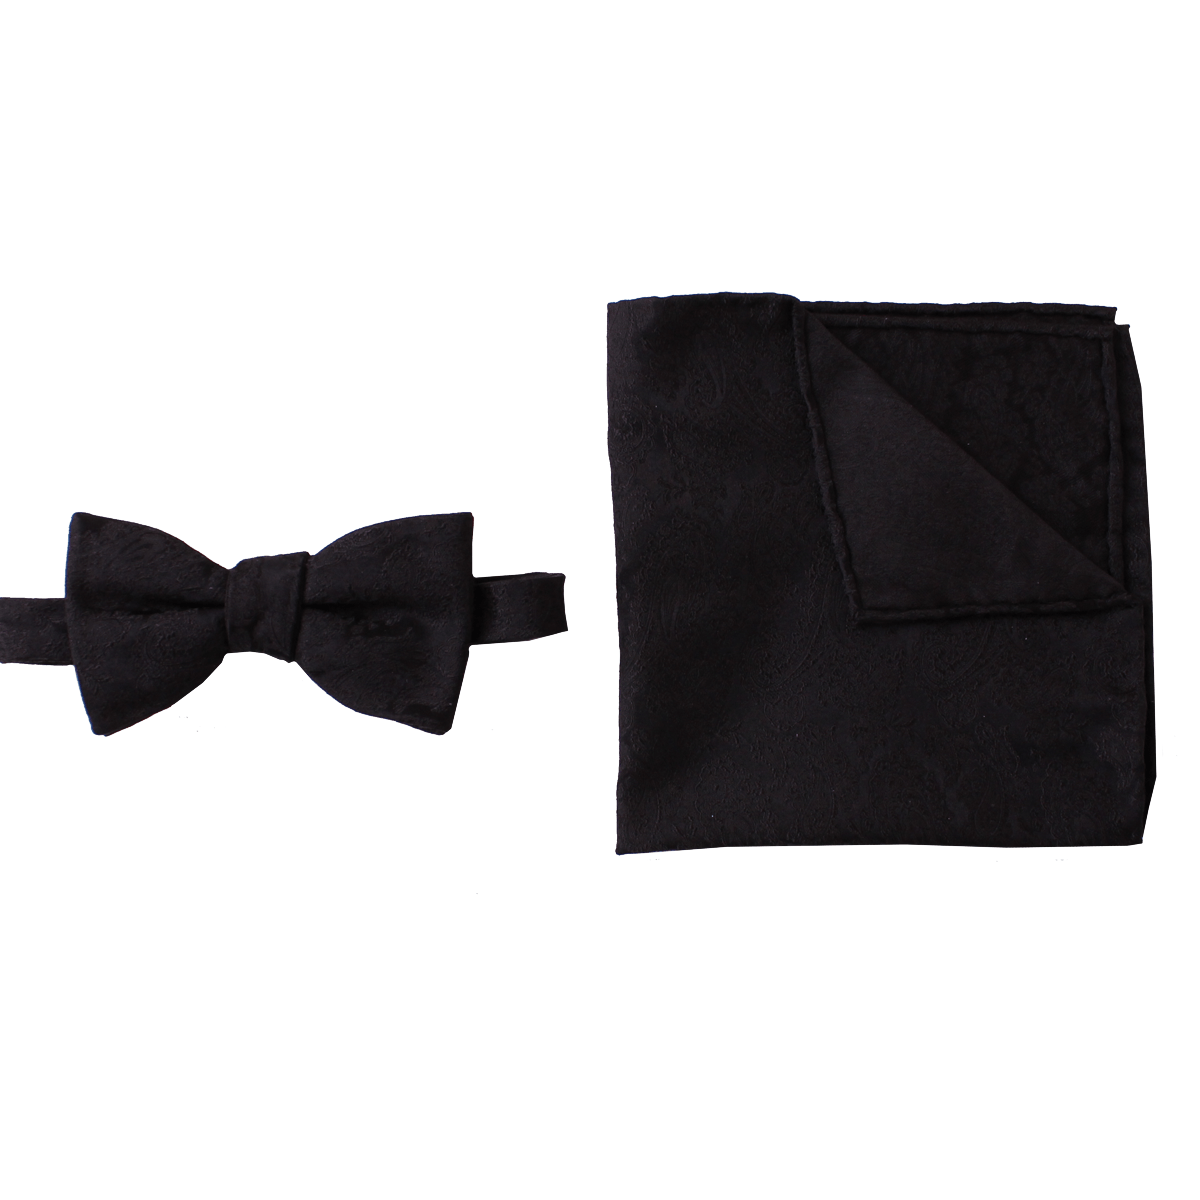 Black Patterned Weave Silk Bow Tie & Handkerchief Set  Robert Old   